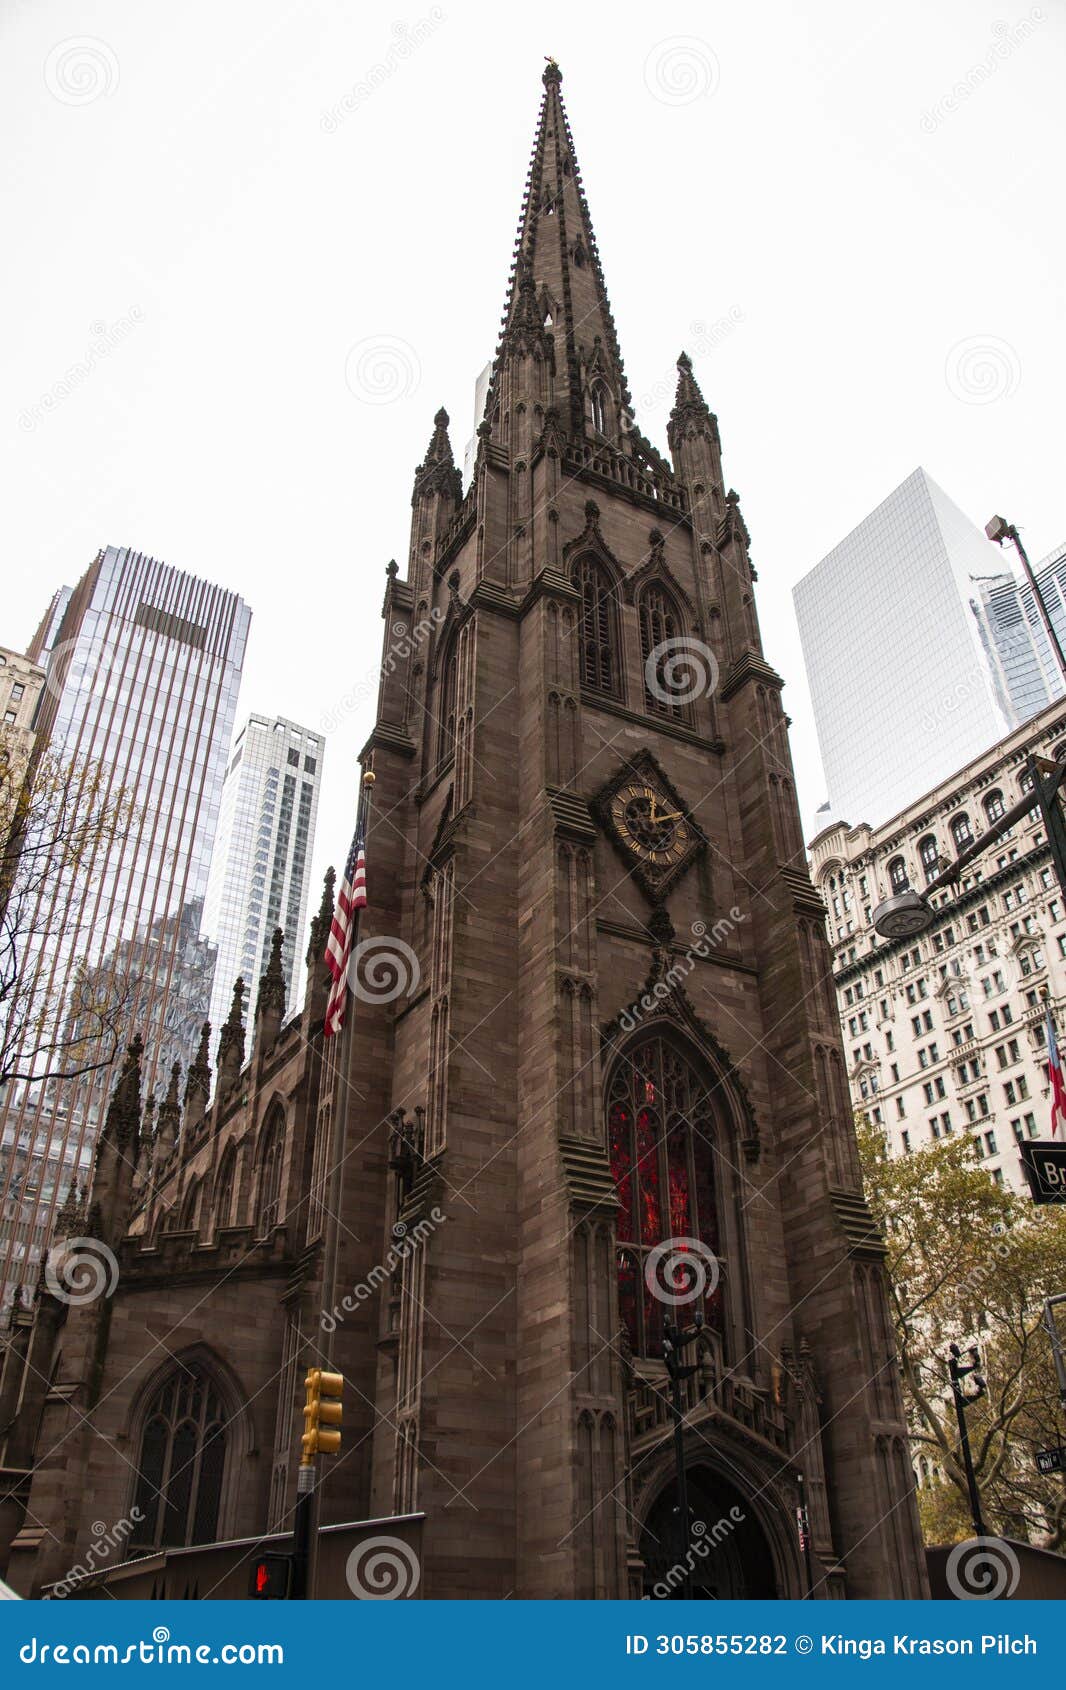 trinity church on broadway, manhattan, new york city